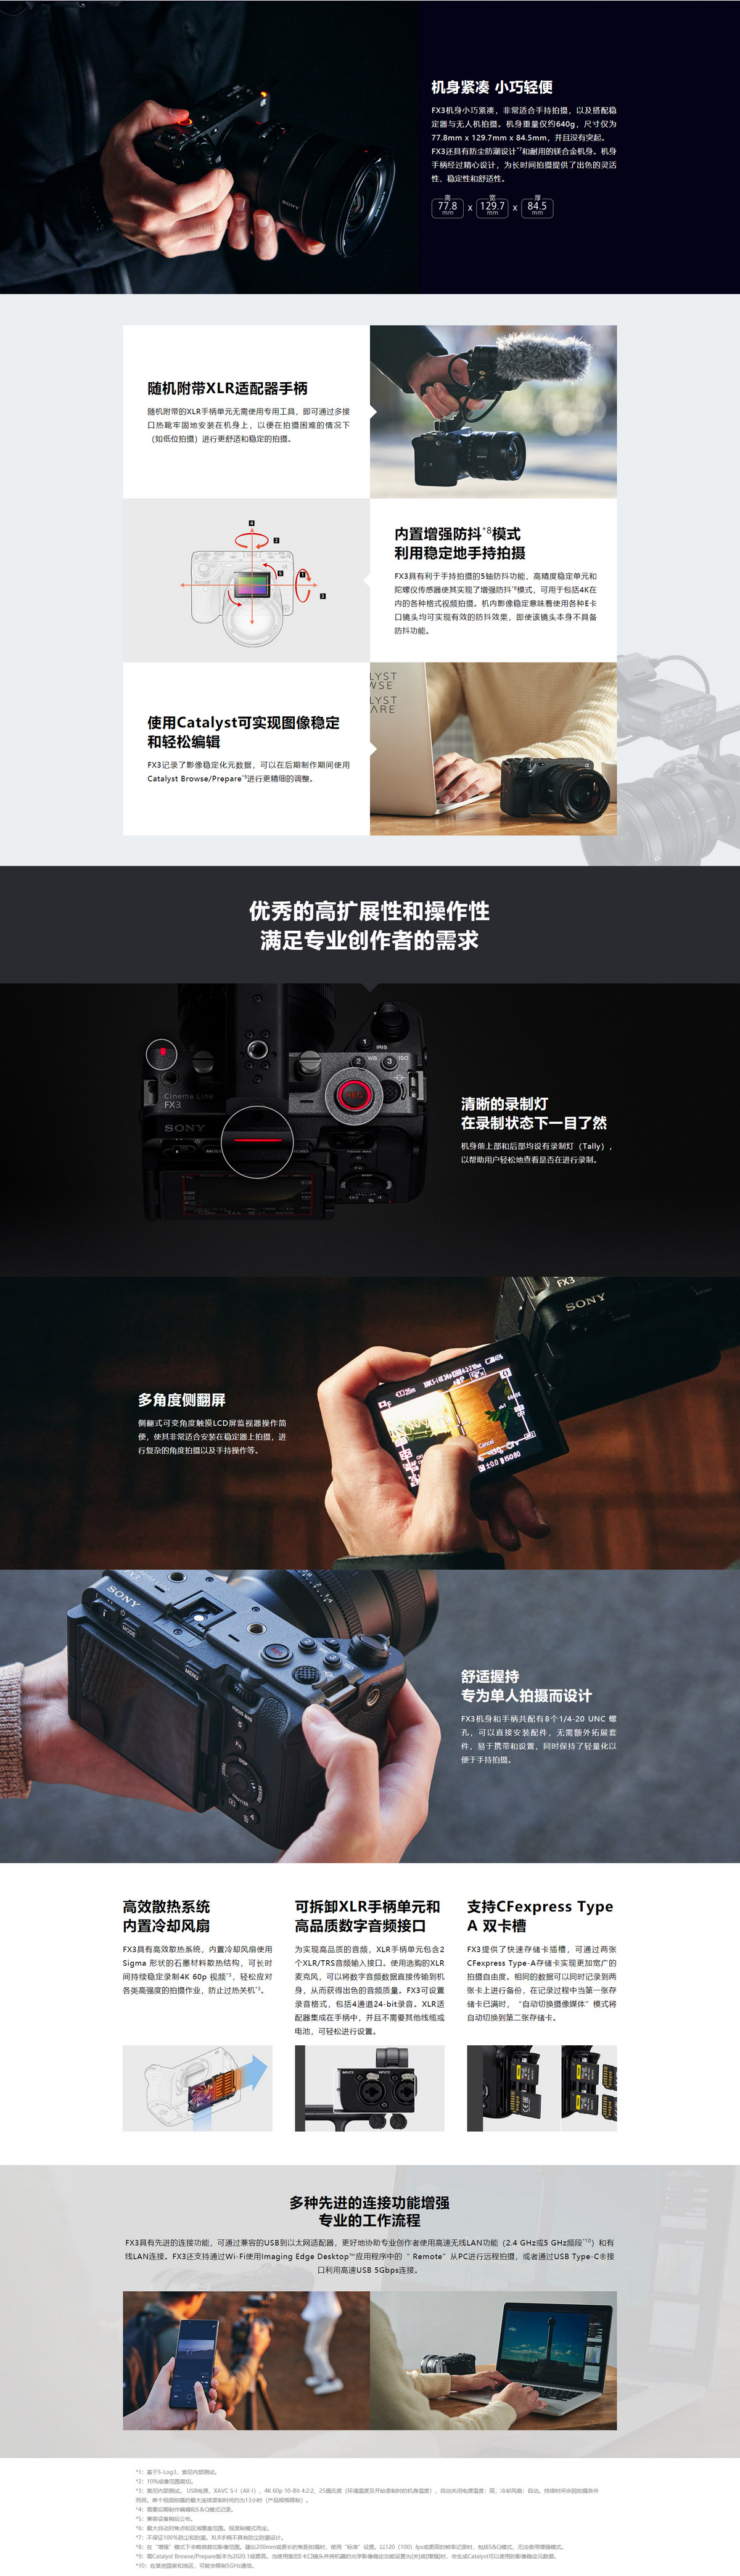 Sony 索尼 ILME-FX3全画电影幅摄影机 4K电影专业机